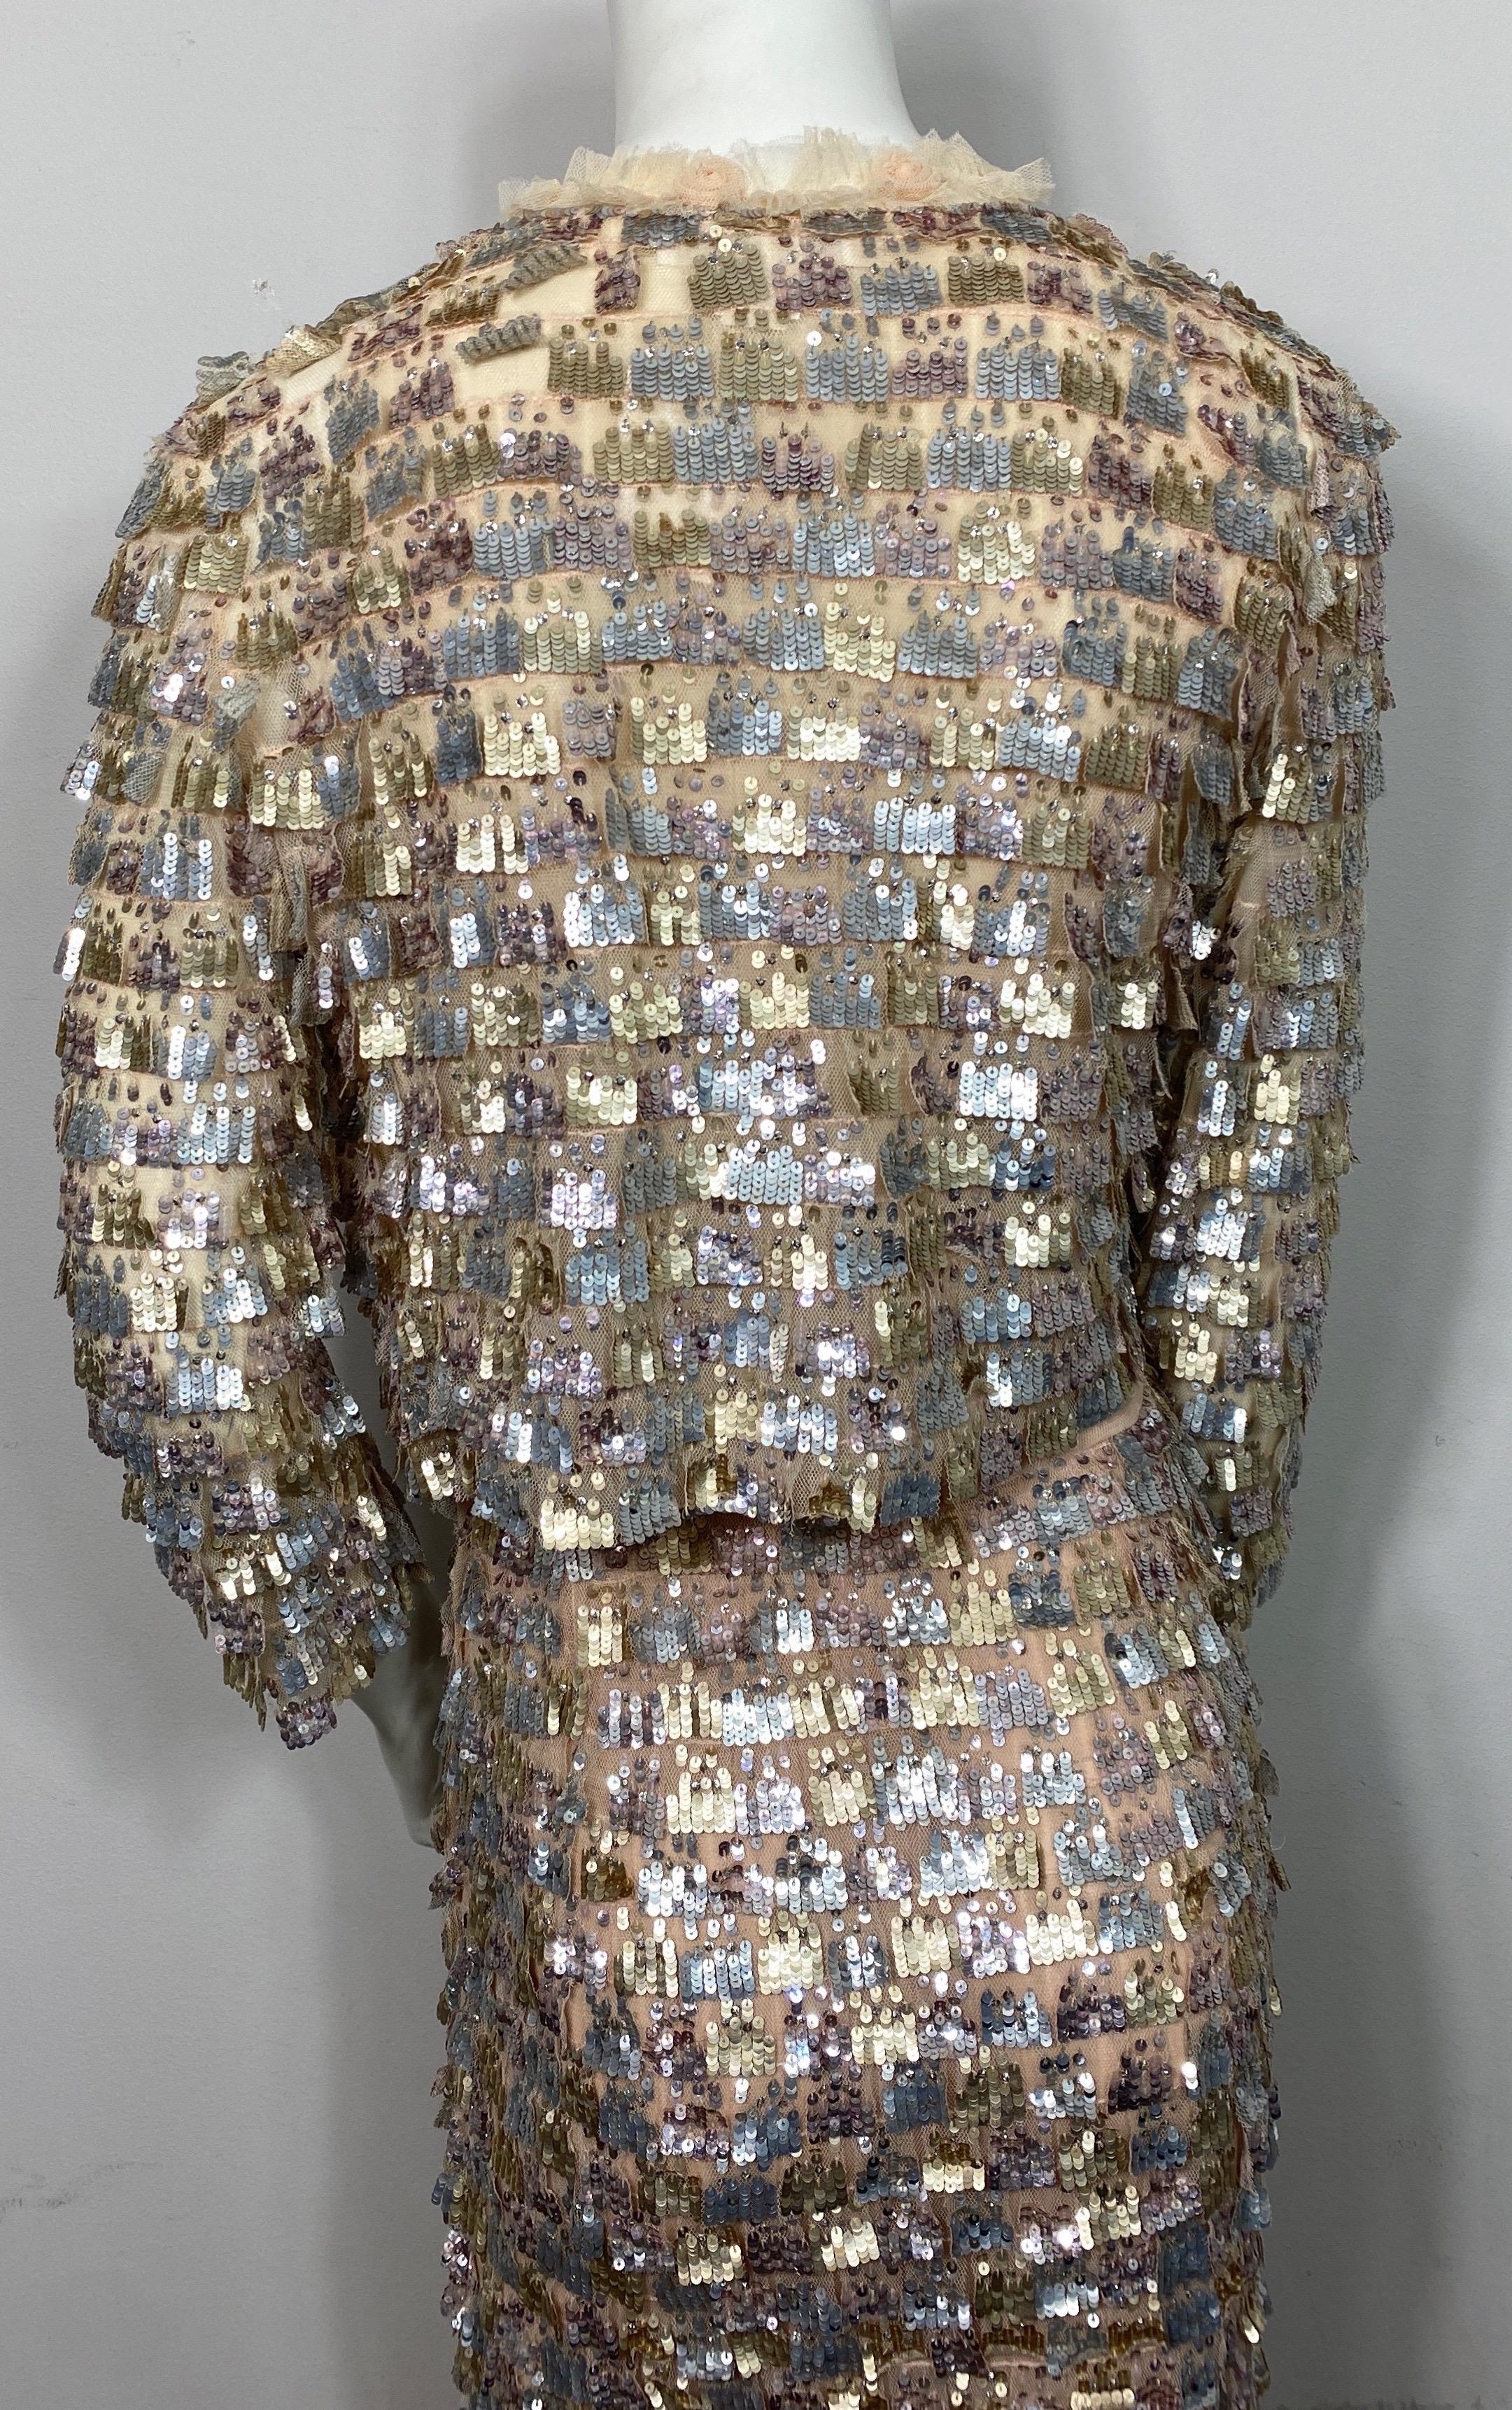 Oscar de la Renta Early 2000’s Nude and Metallic Gown with Jacket-Size 4 9